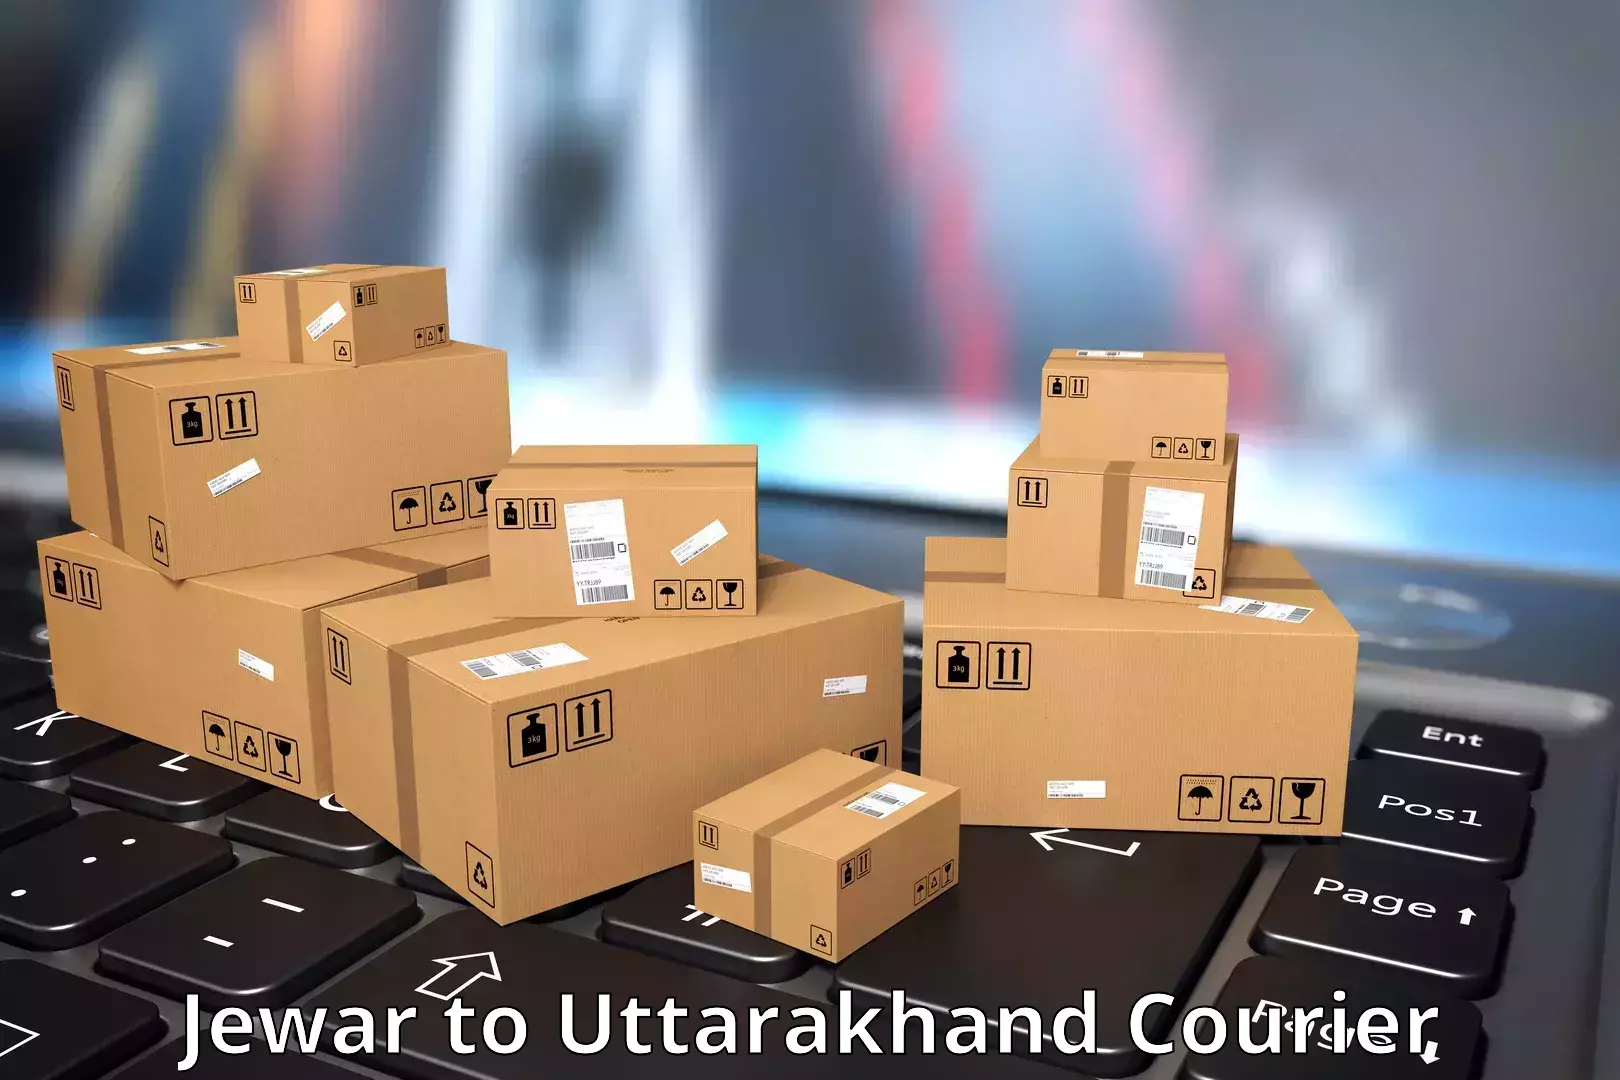 Courier service partnerships Jewar to Uttarakhand